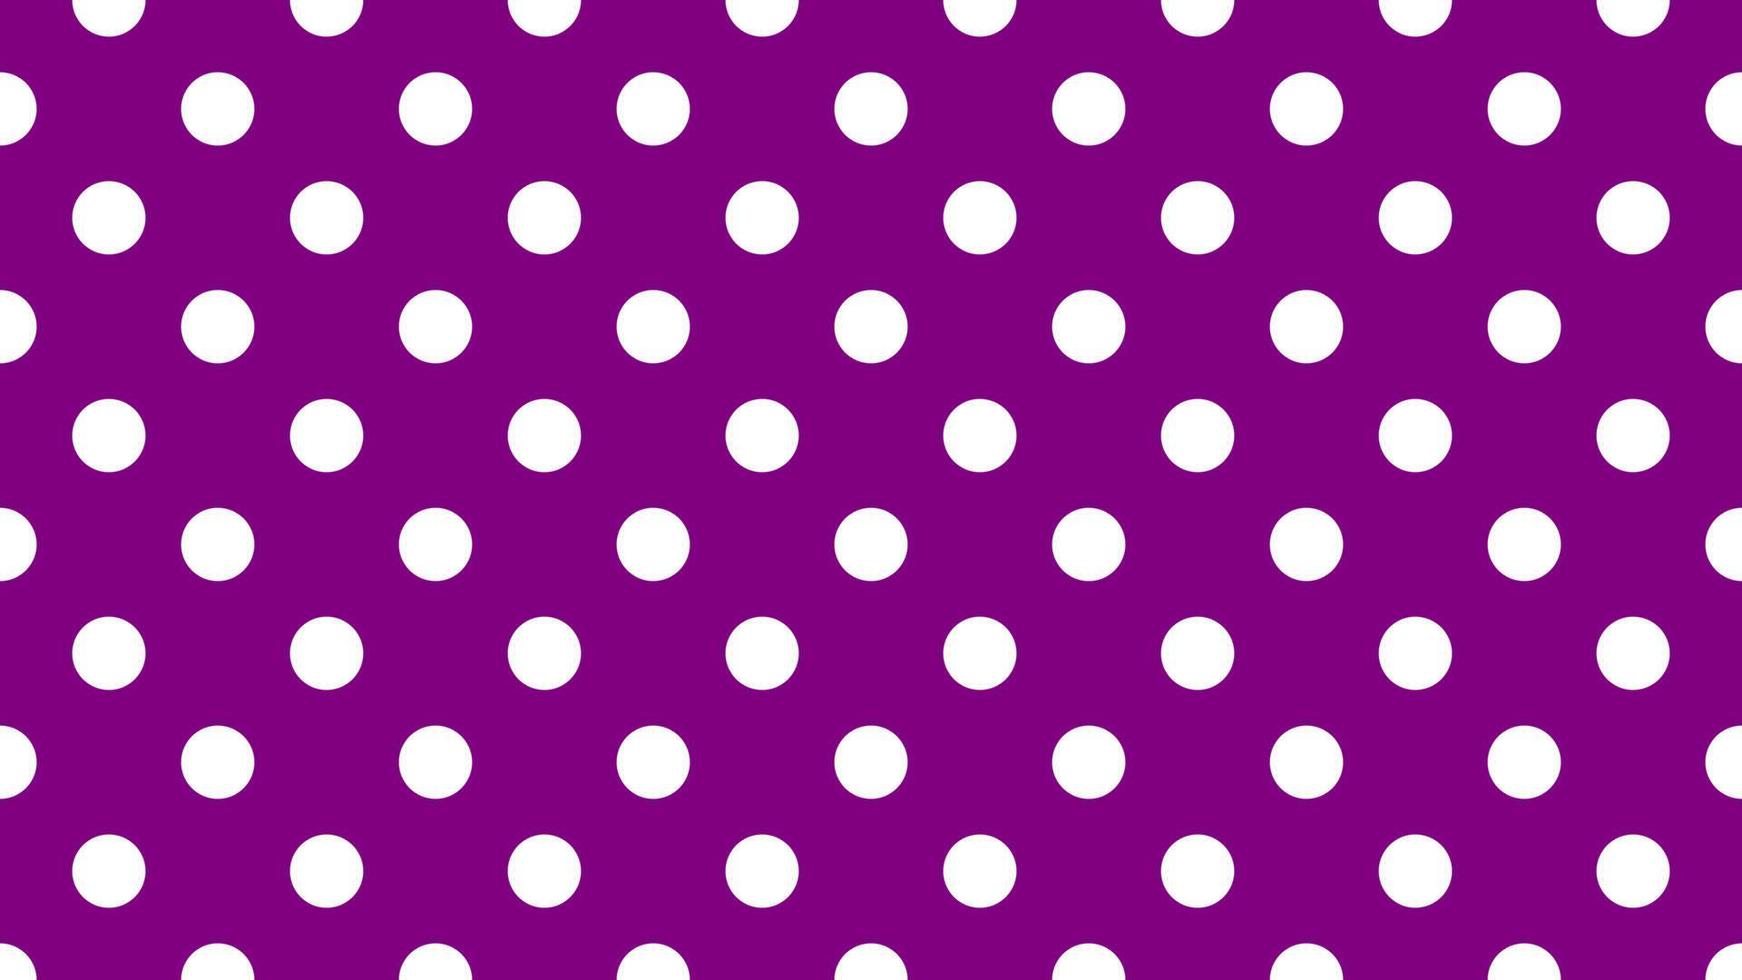 wit kleur polka dots over- Purper achtergrond vector